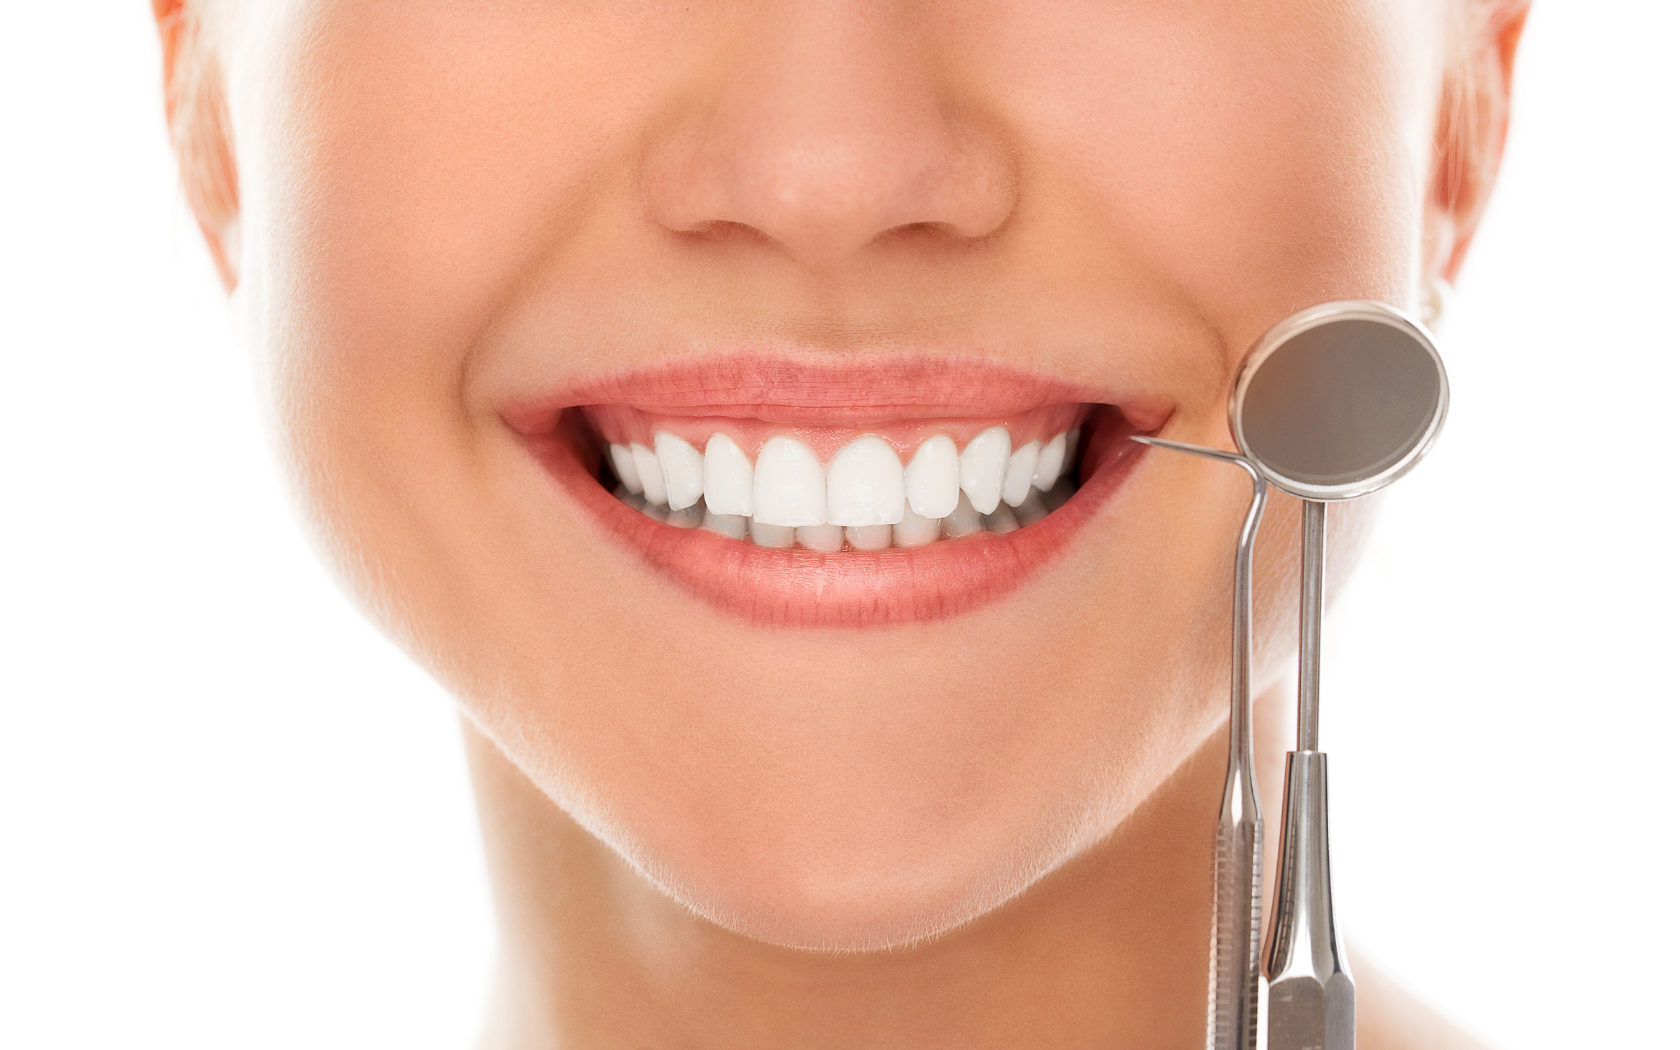 CK Dental Care creando sonrisas